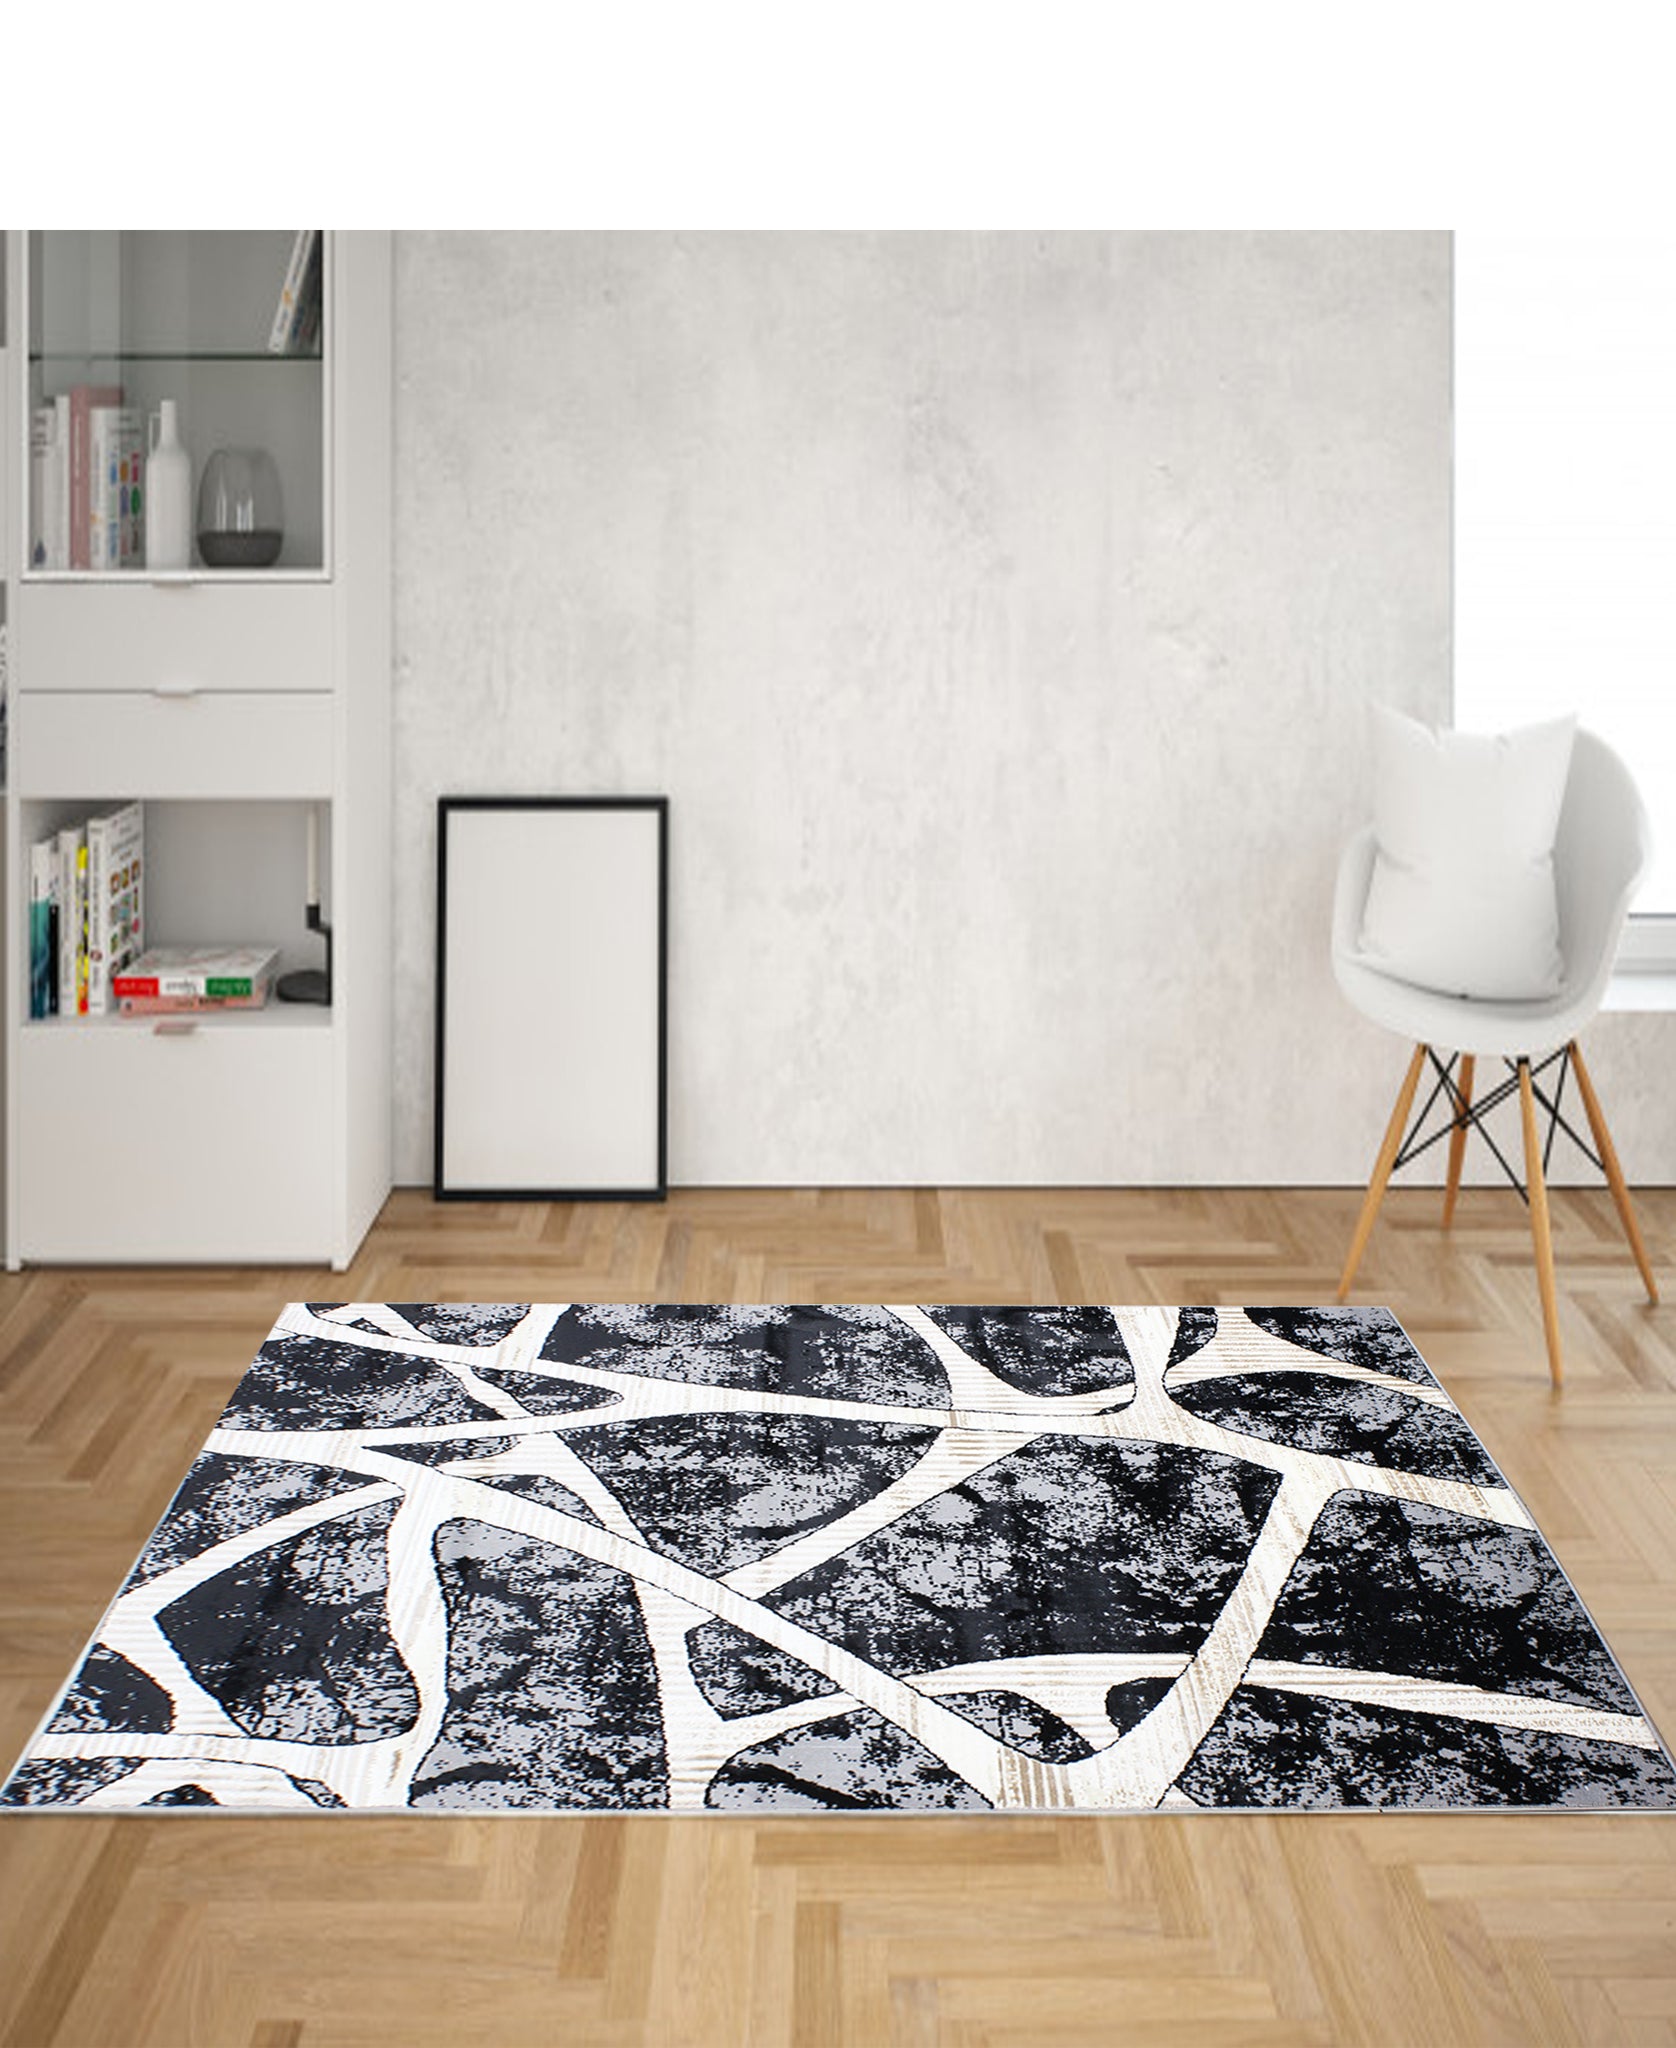 Damascus Swerve Carpet 1600mm x 2300mm - Black & Grey